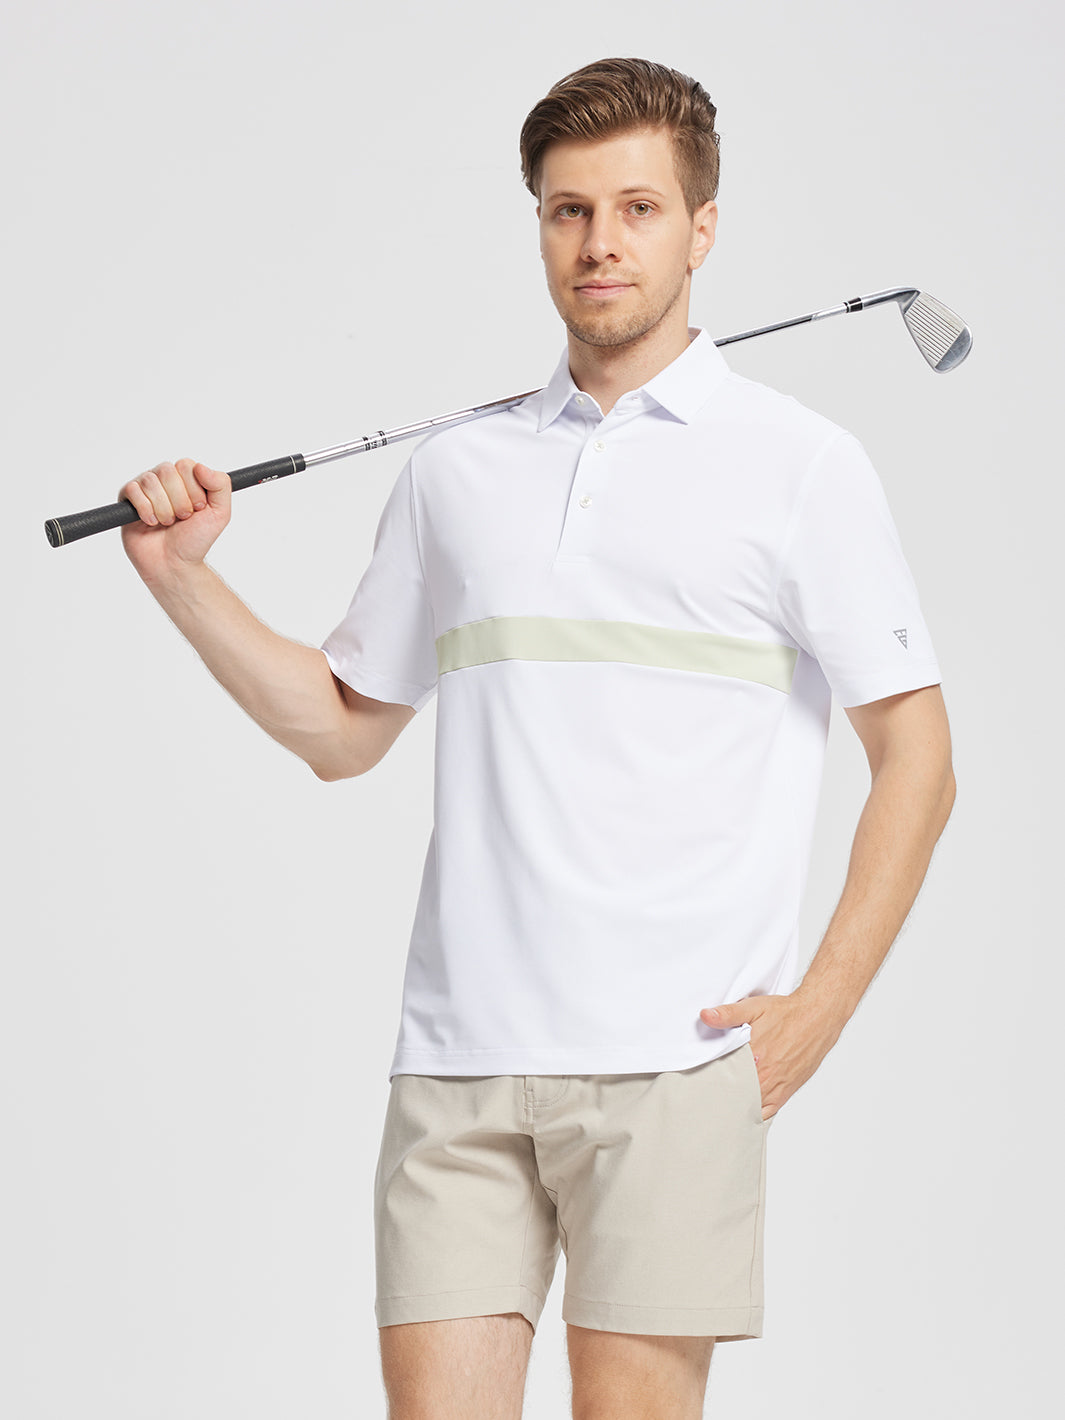 Men's Dry Fit Pique Golf Shirts-White